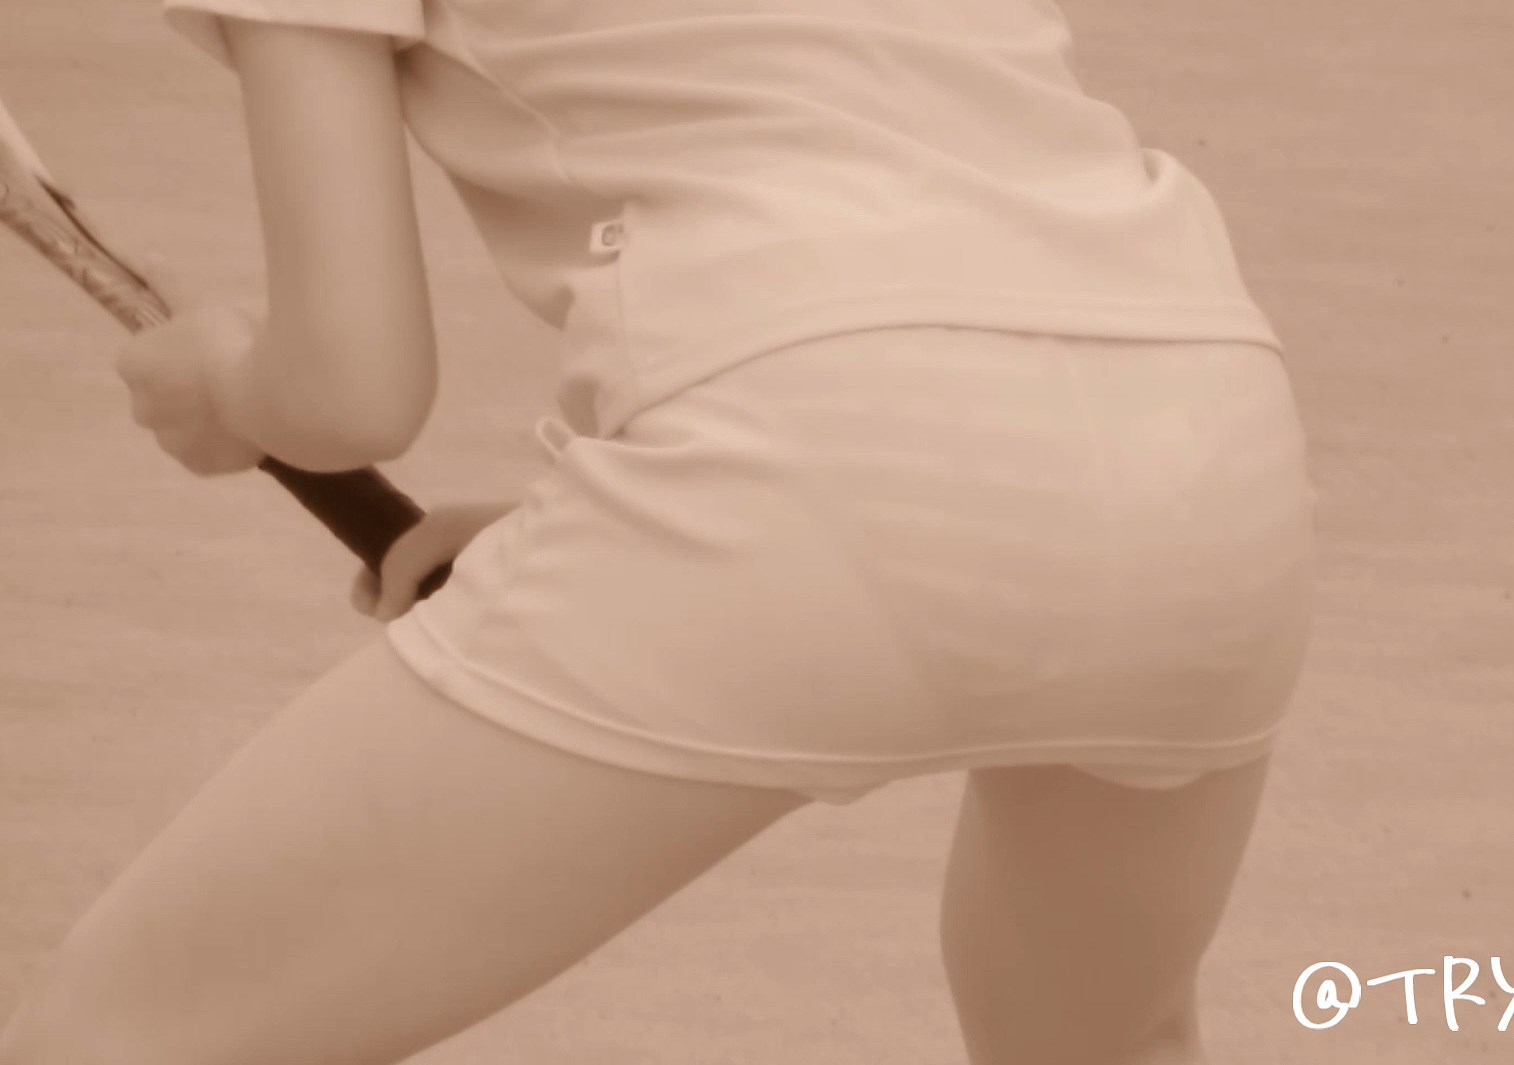 【FullHD1015】テニス少女のパンツは水玉が多い 画像つき詳細レビュー